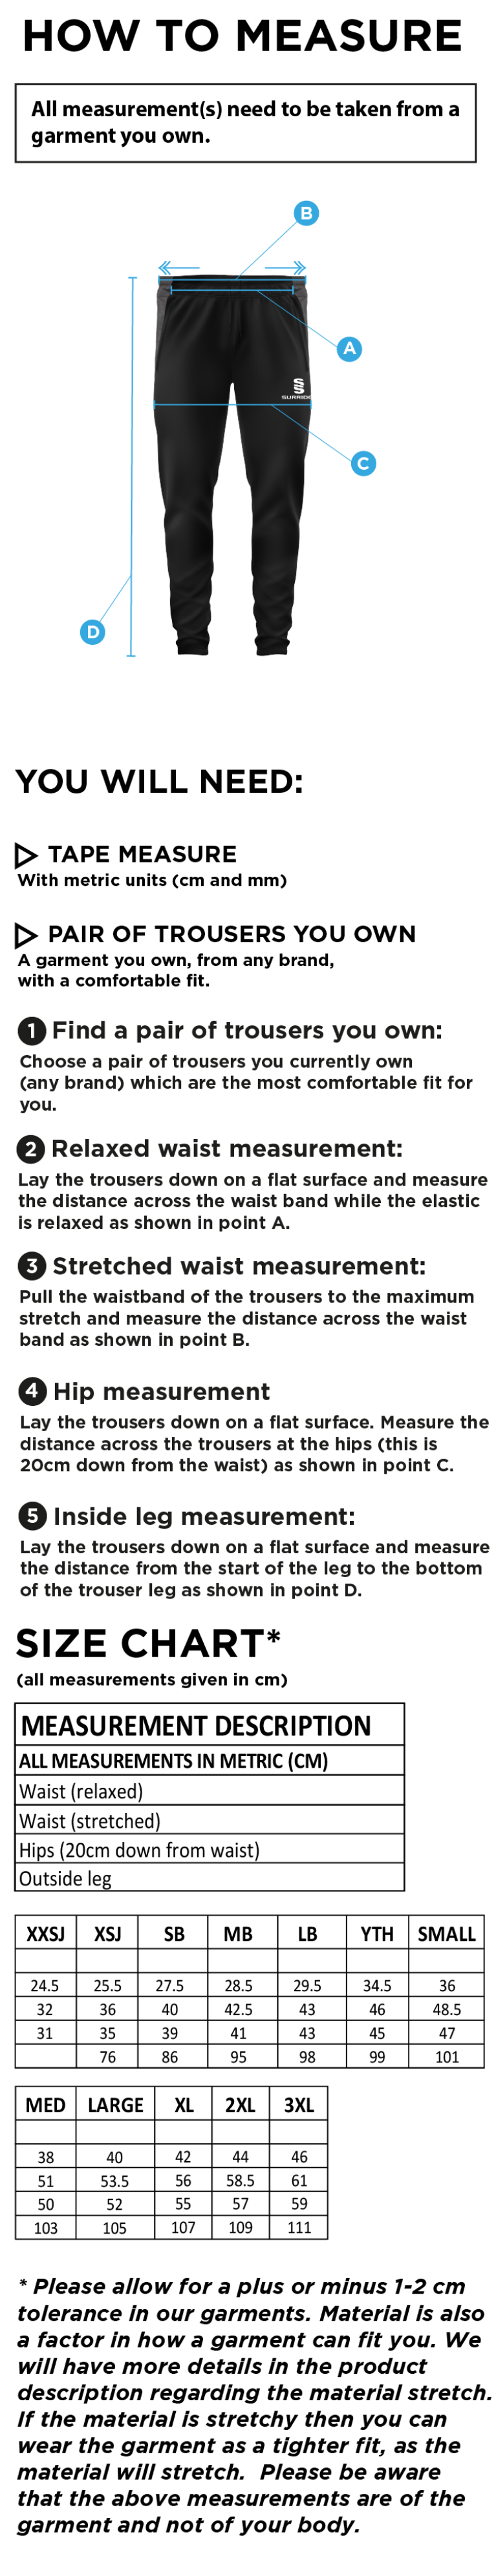 Tek Slim Training Pants : Black - Size Guide